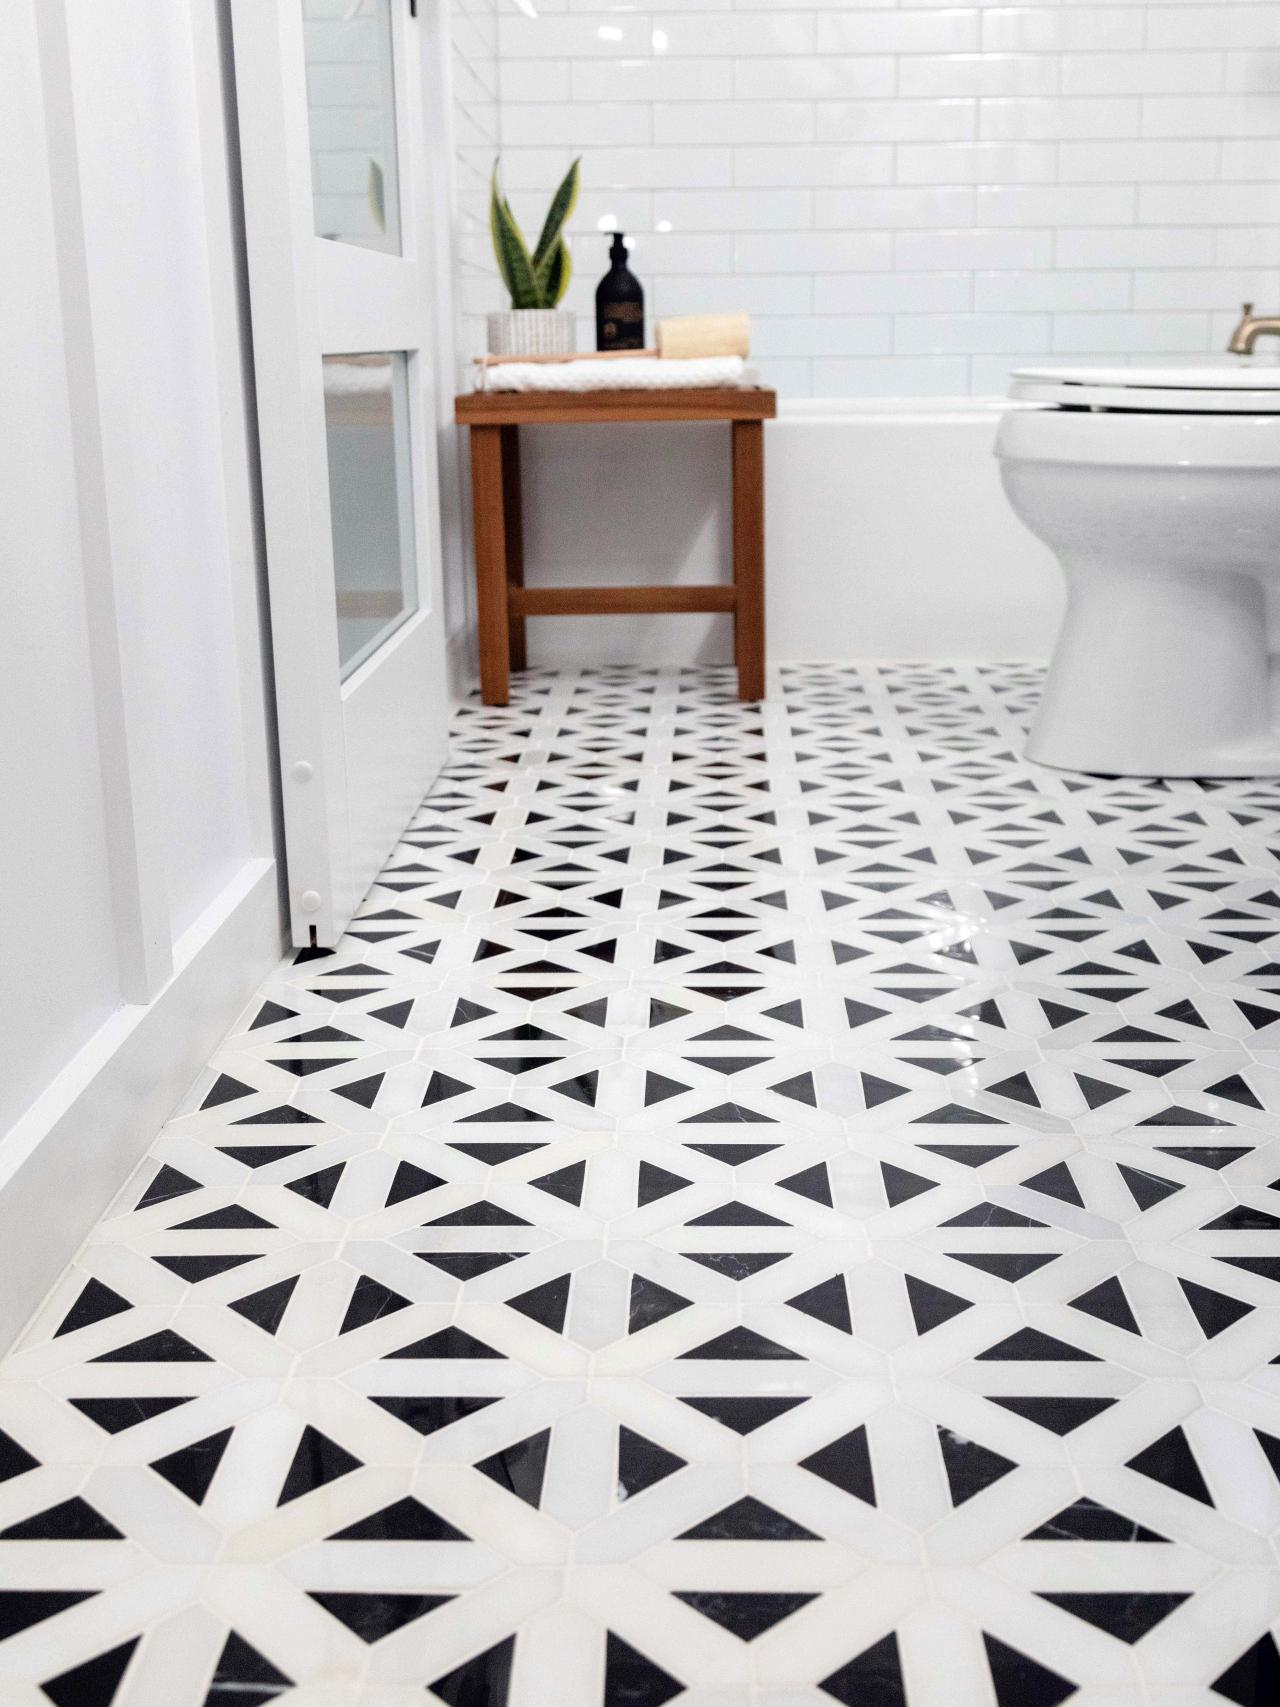 How To Lay A Tile Floor, Replacing Bathroom Floor Tile